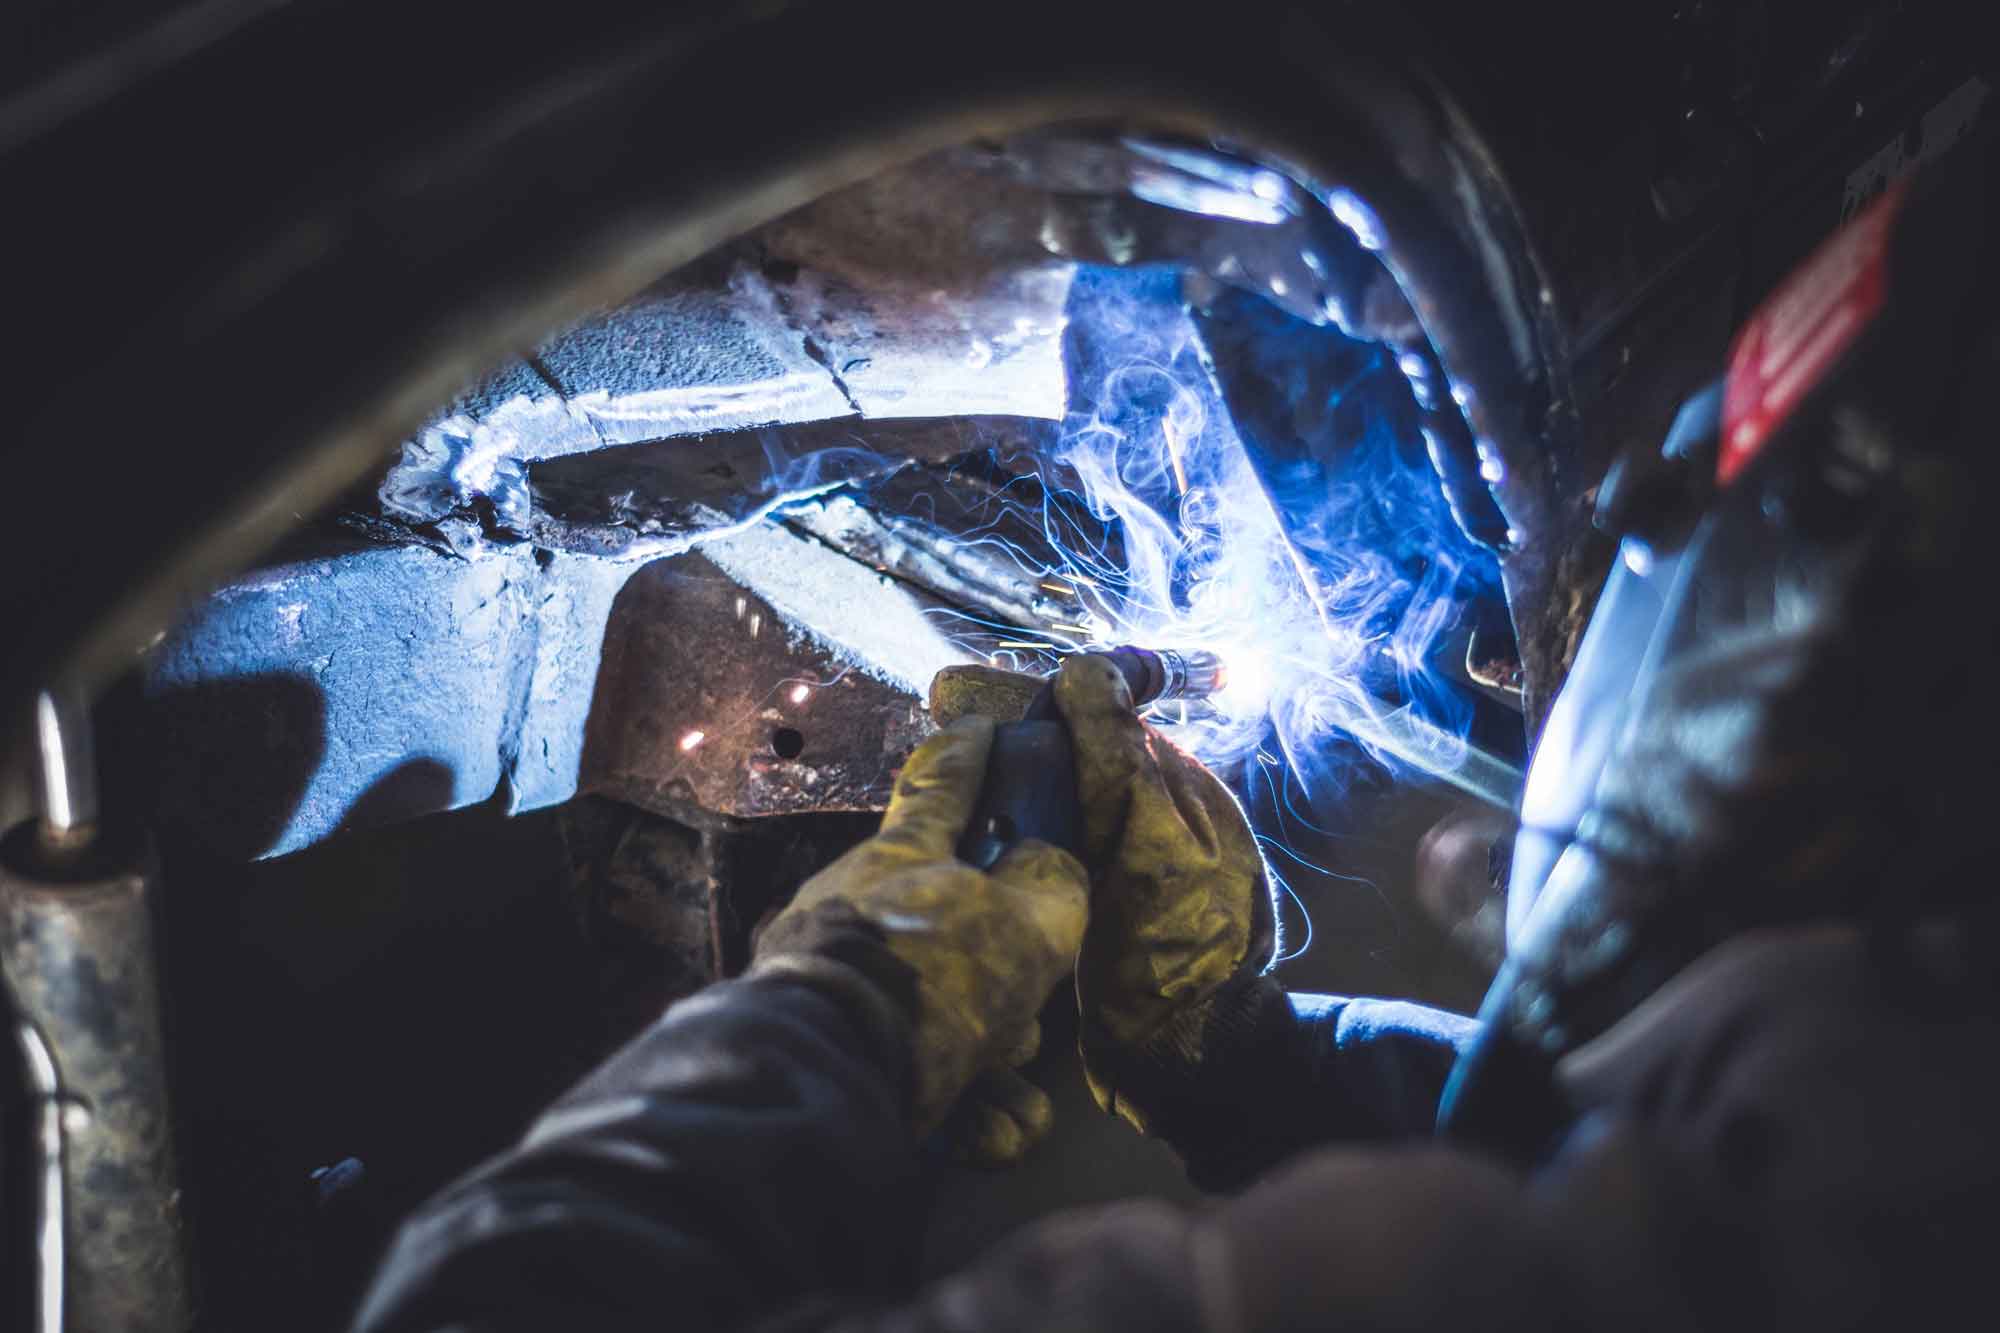 collision repair services tech welding